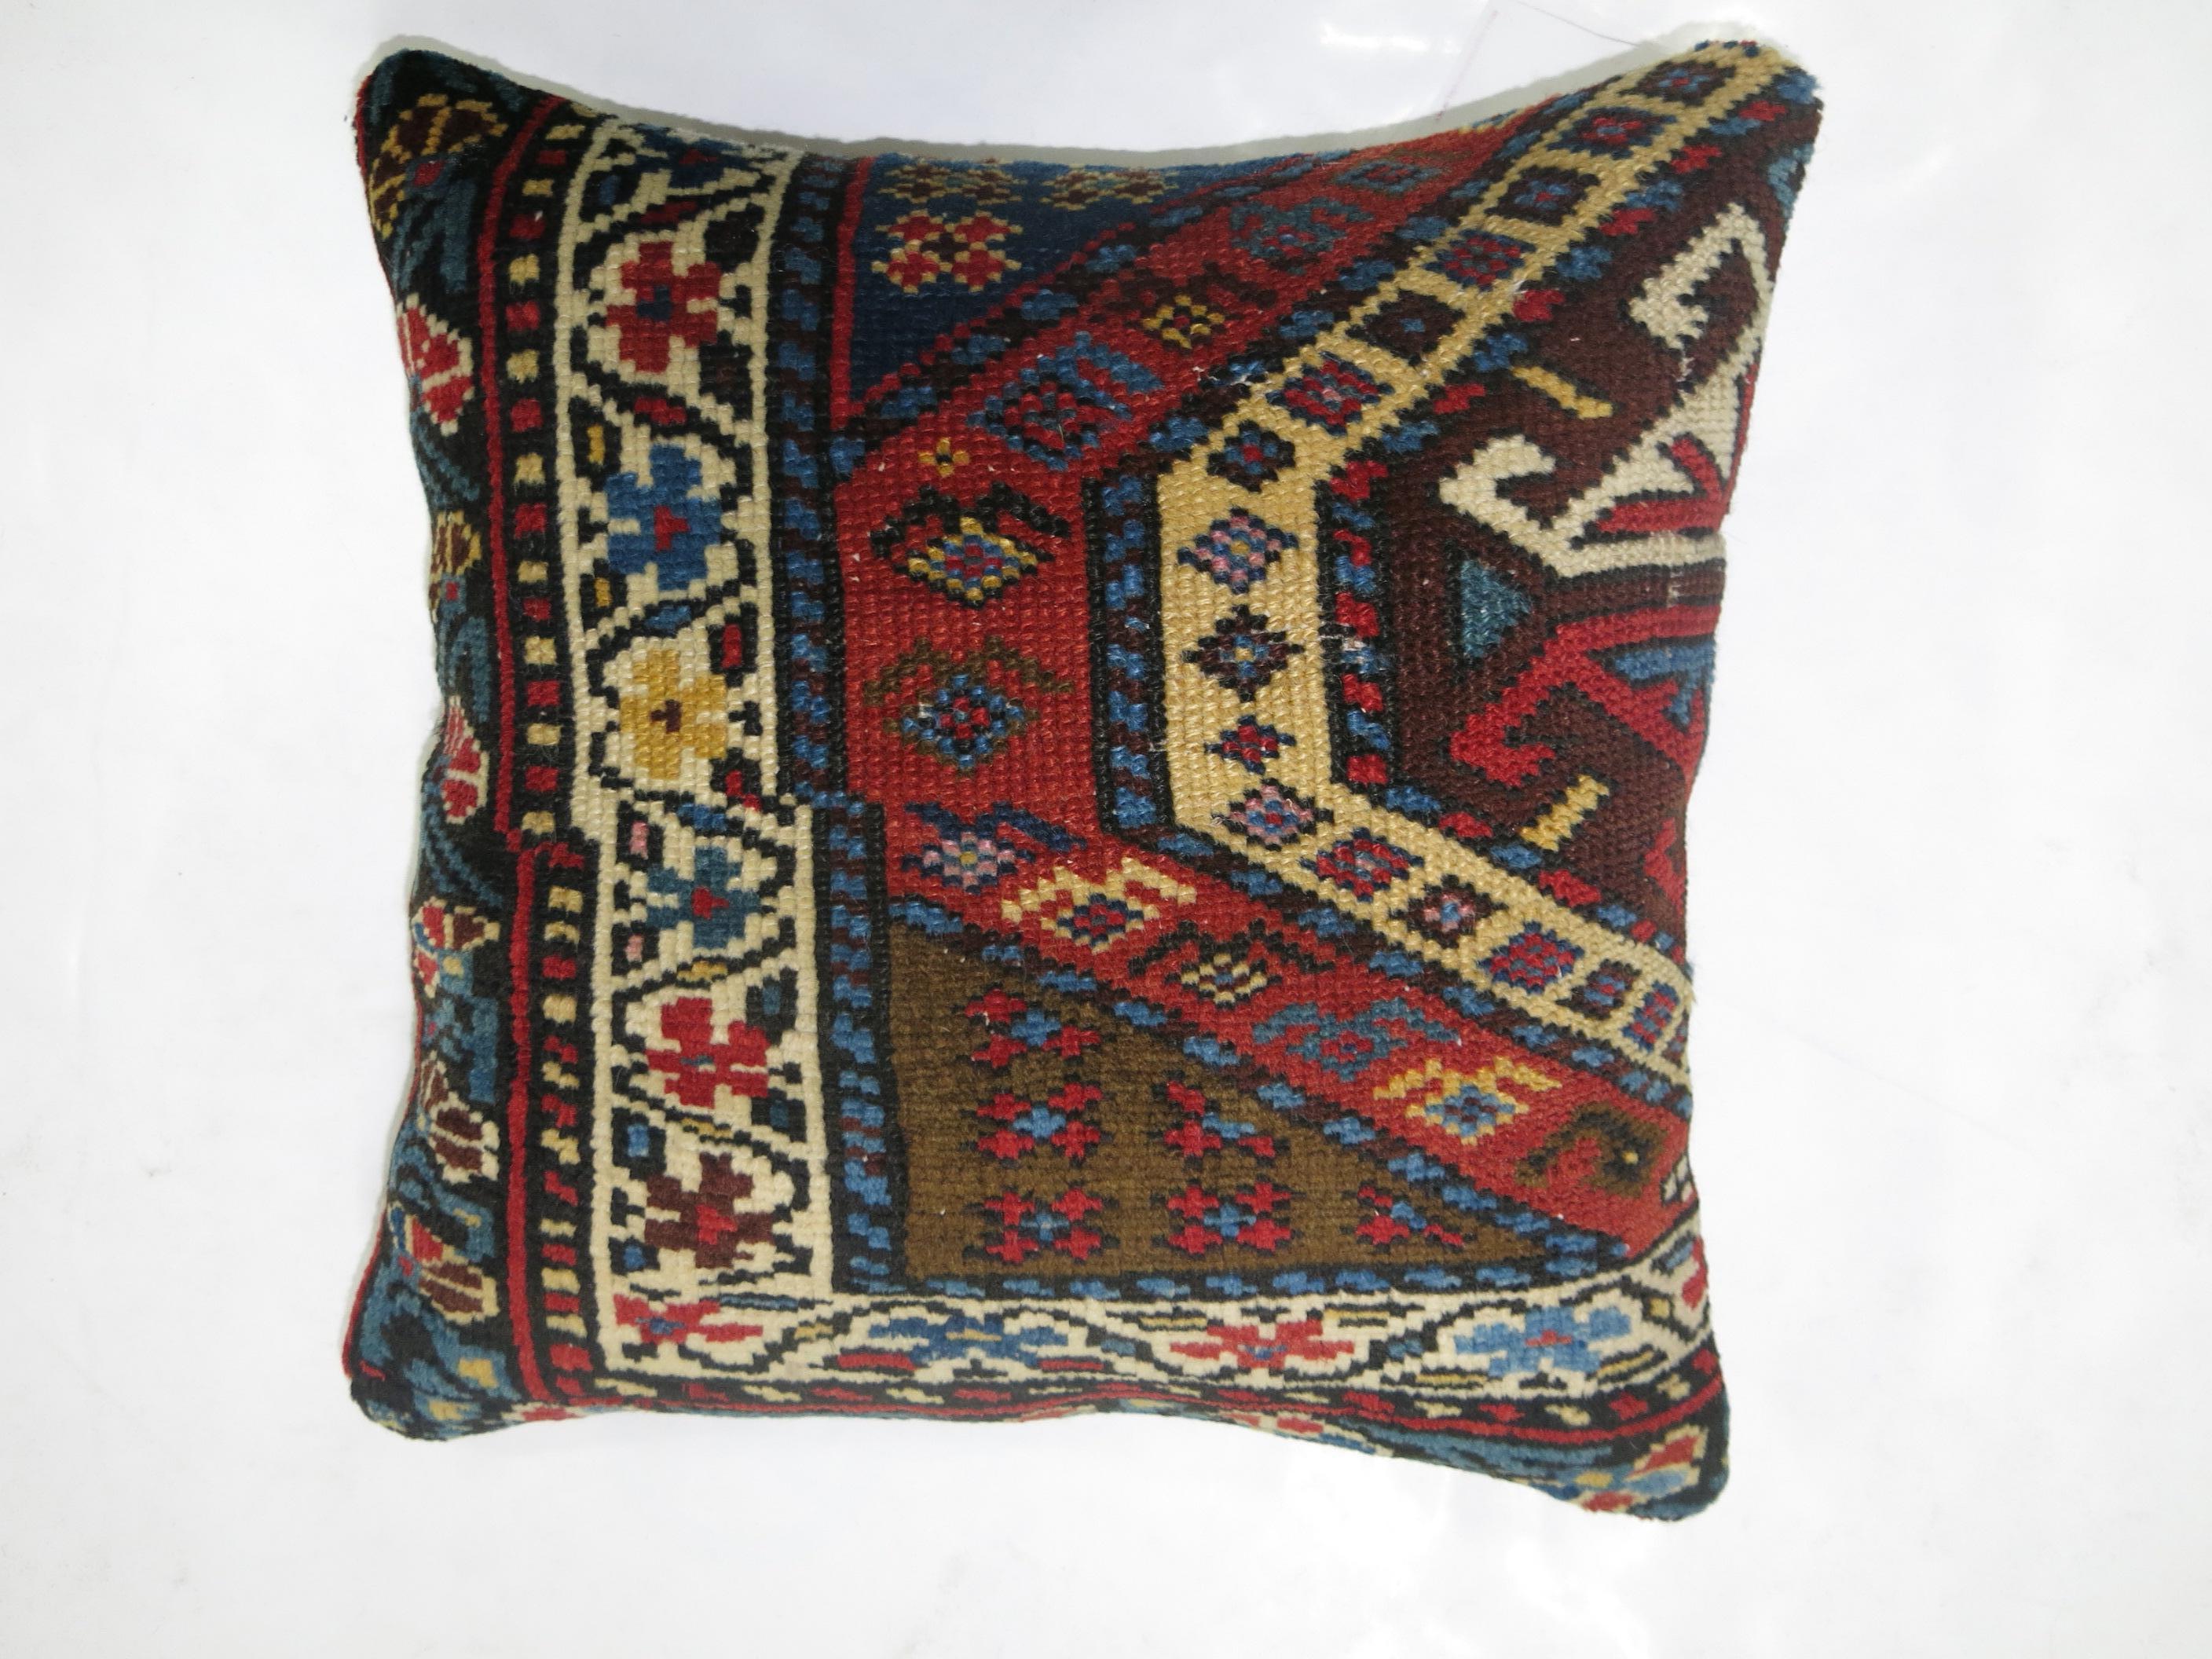 19th Century Square Traditional Antique Caucasian Red Blue Tribal Kazak Rug Pillow